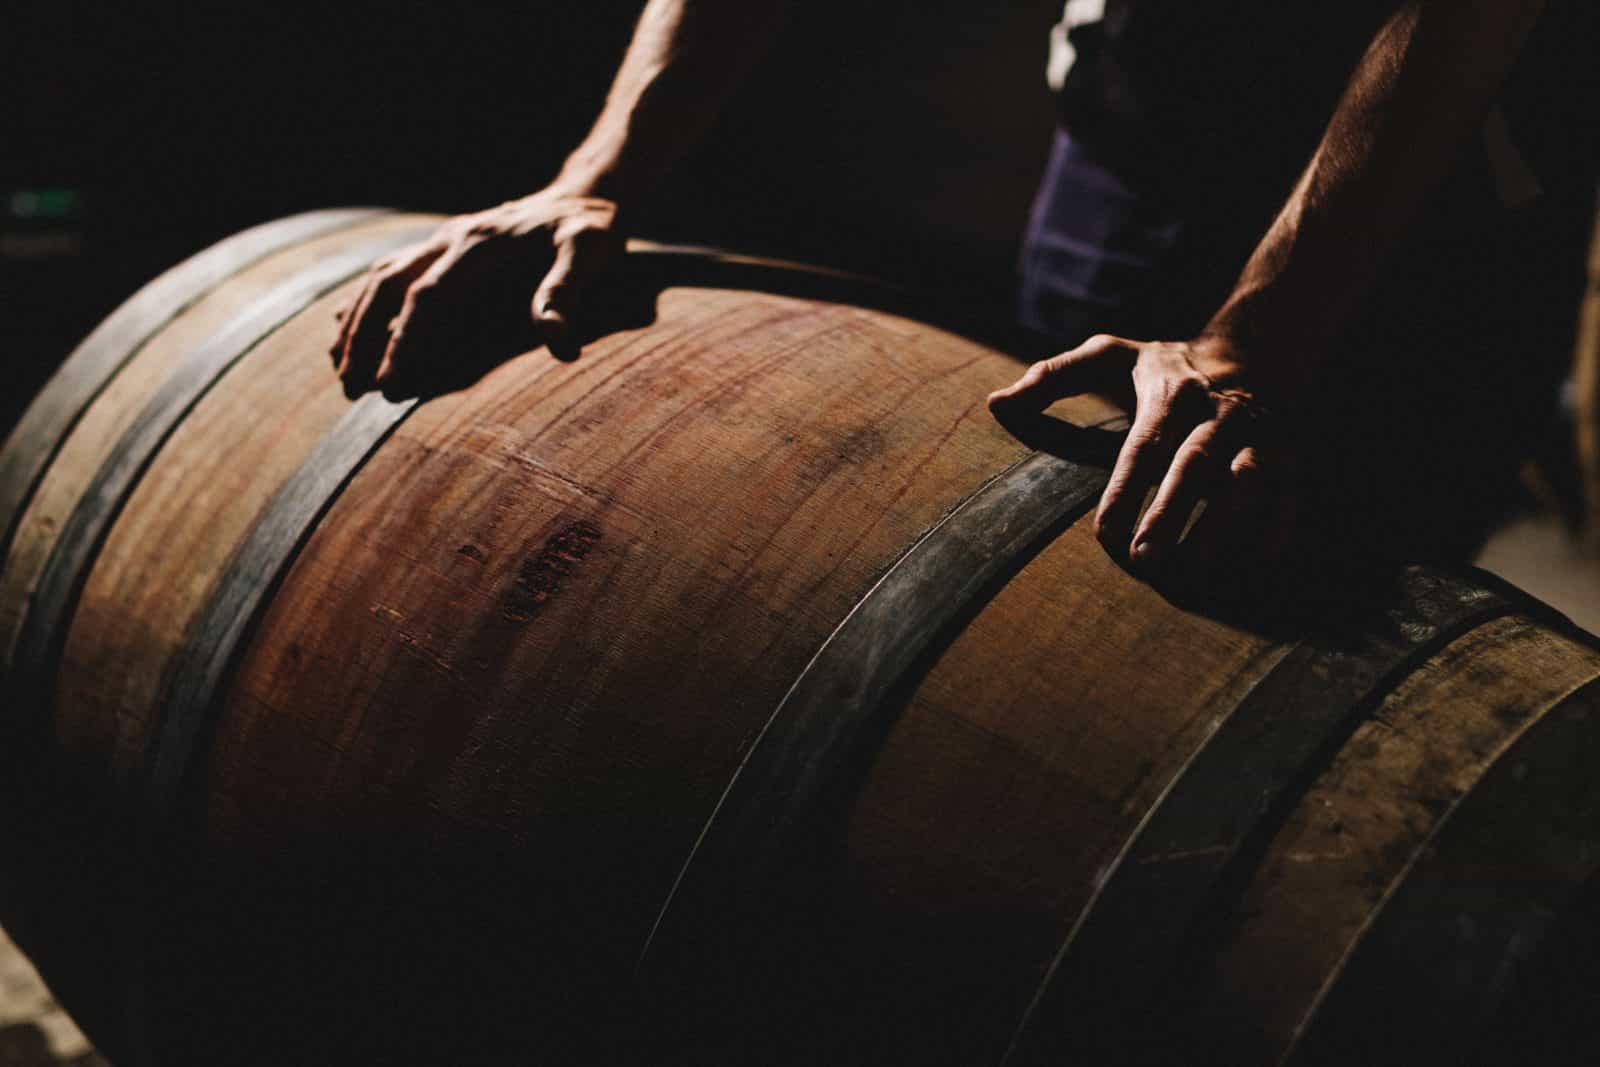 Winemaker rolling barrel